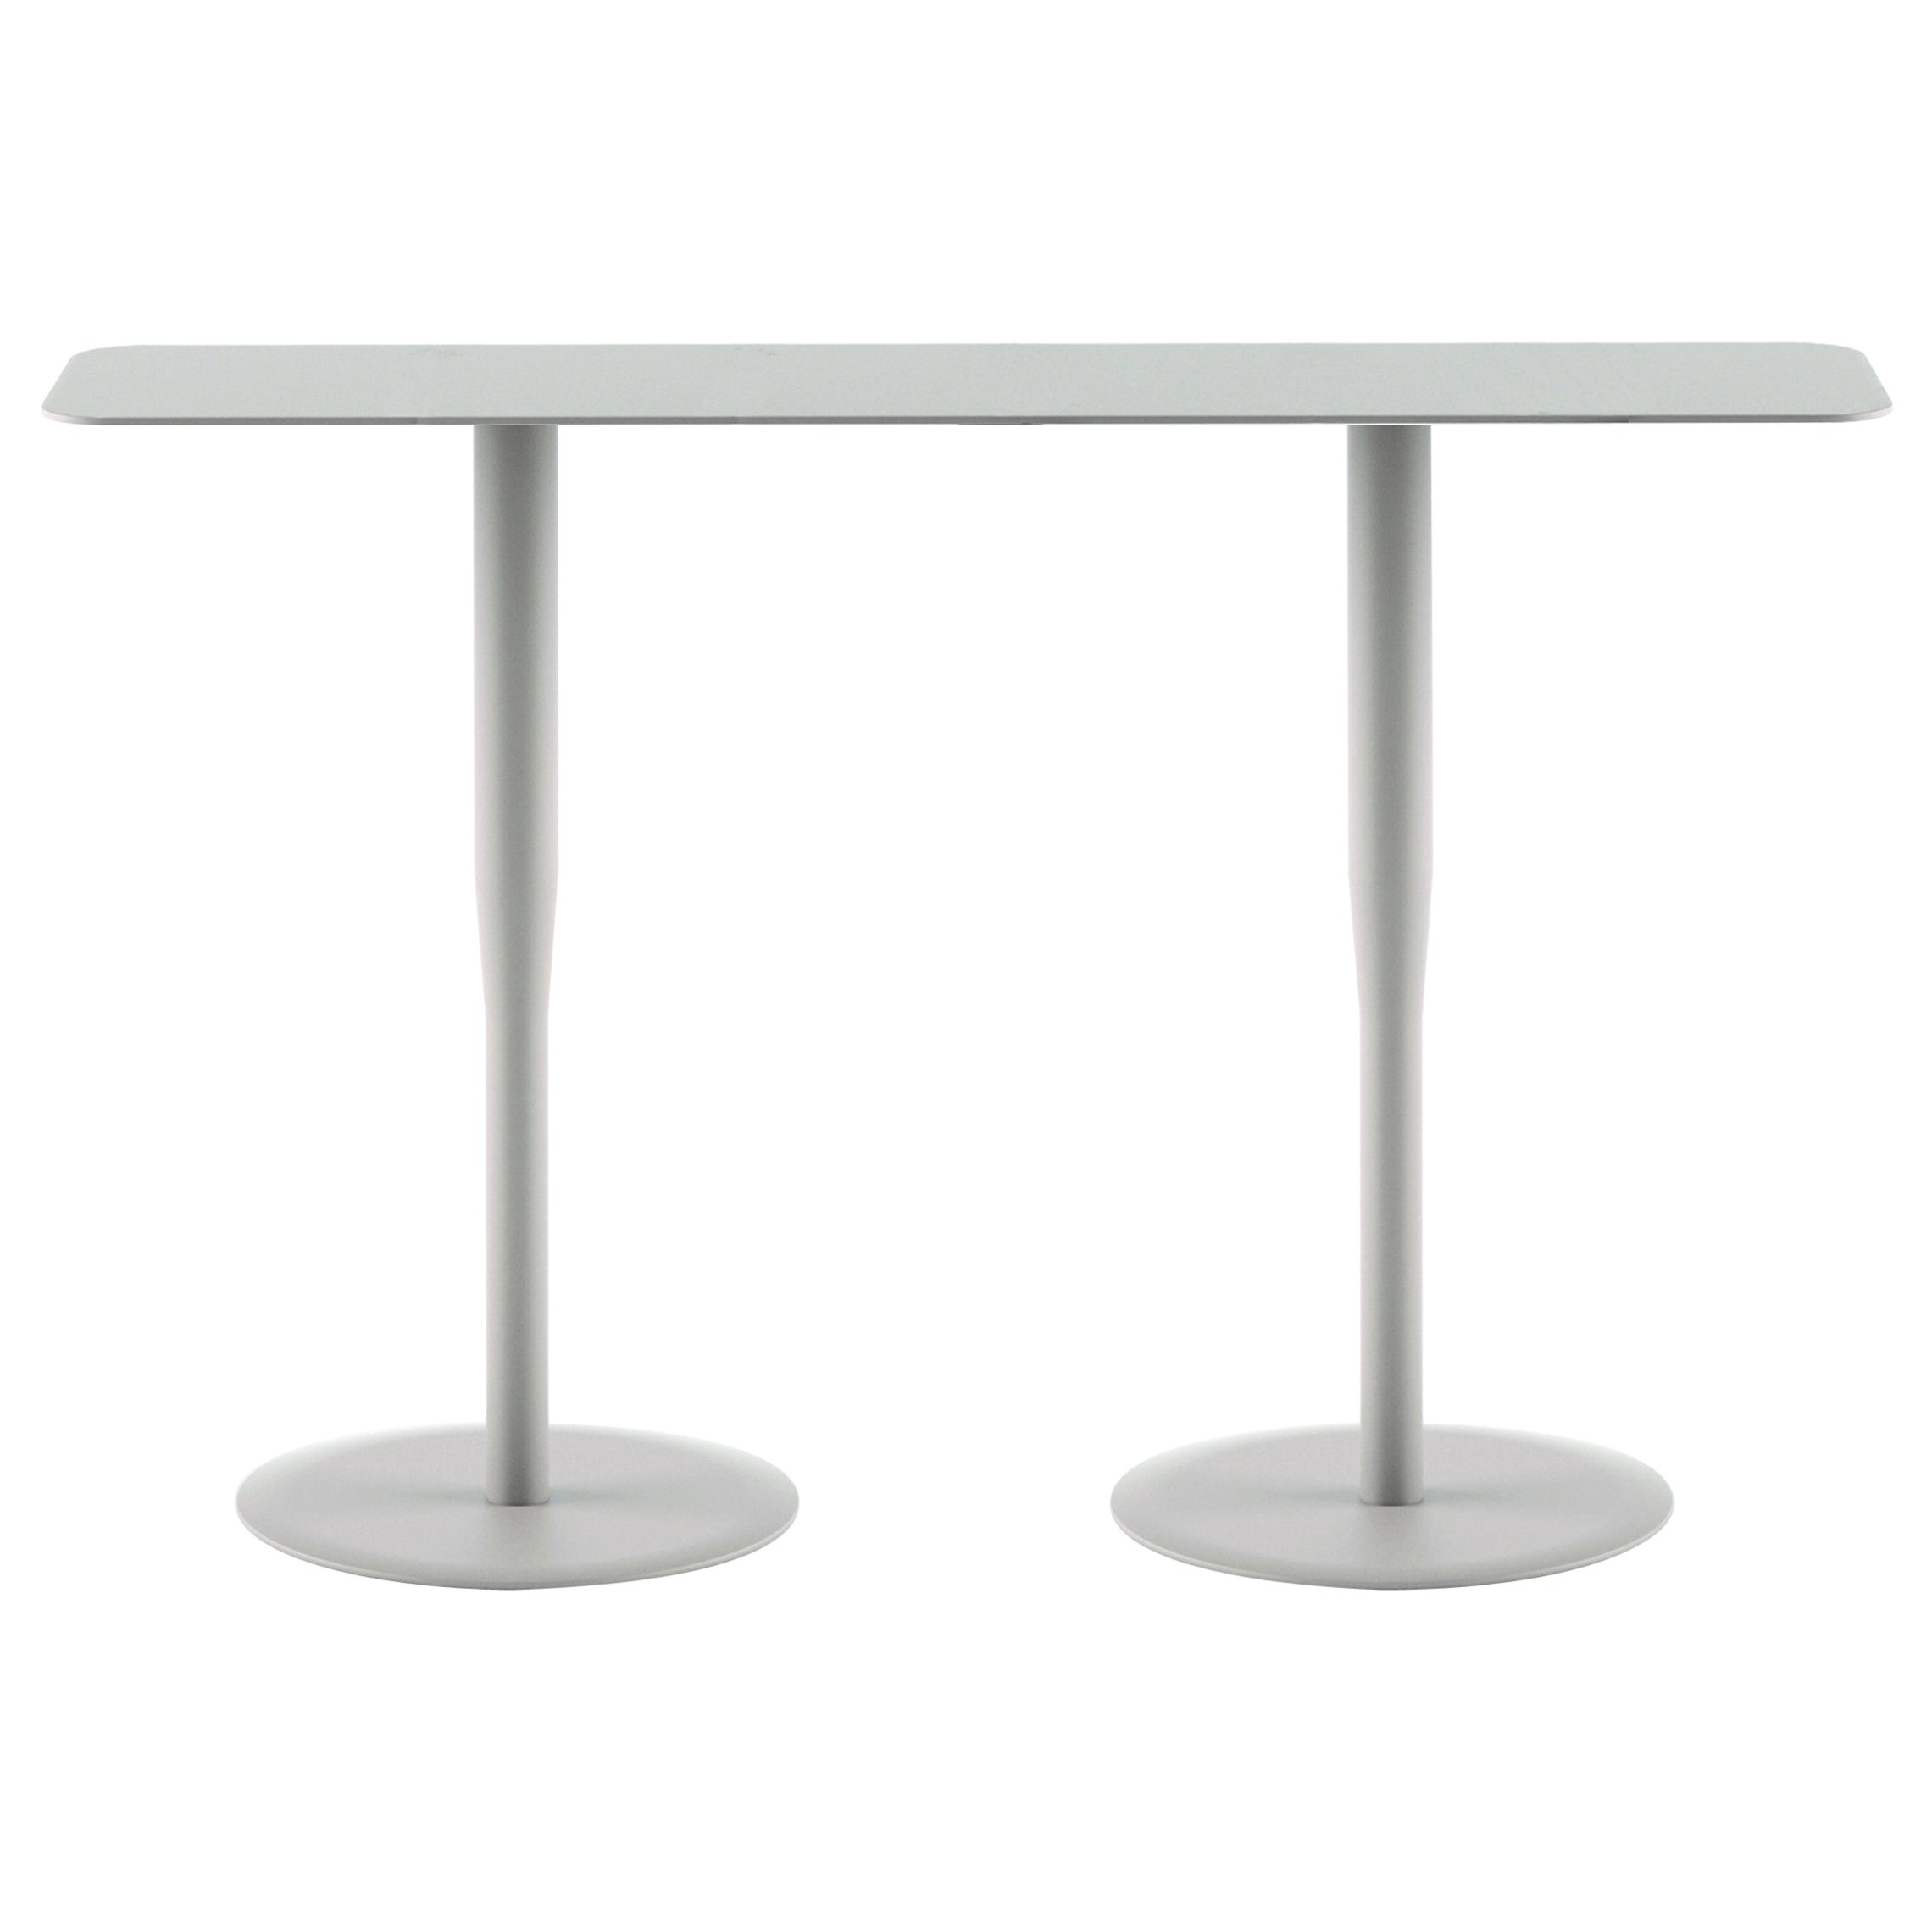 Alias Atlas-Tisch mit Sandplatte und lackiertem Aluminiumrahmen